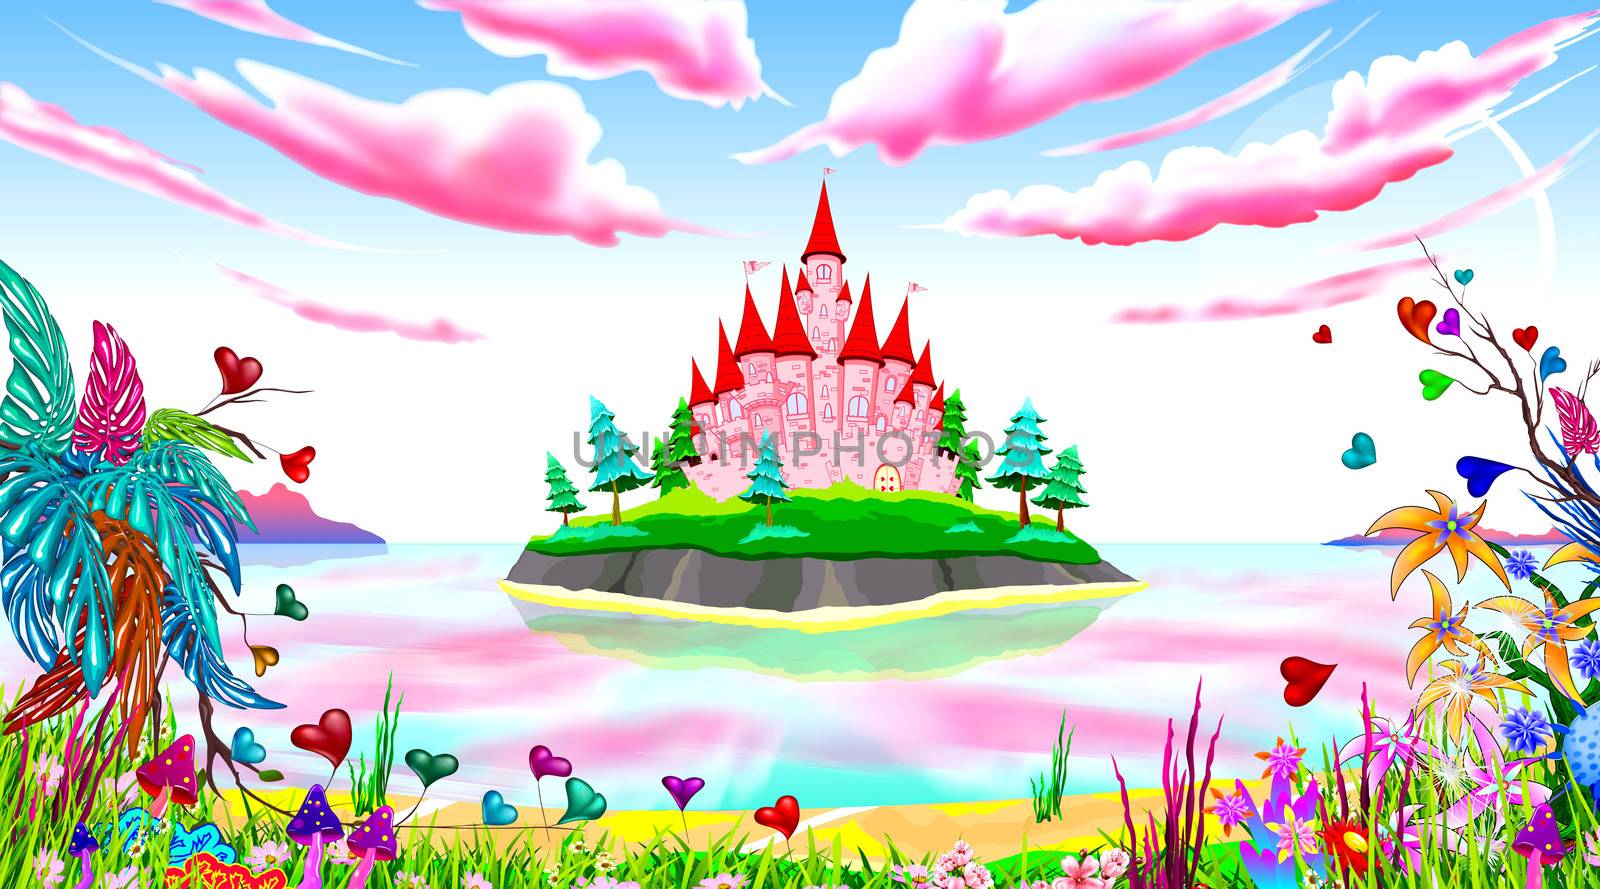 Fantasy fabulous landscape. The island has a pink princess castle. Seascape. Blue sky with pink clouds. Fabulous plants and flowers.